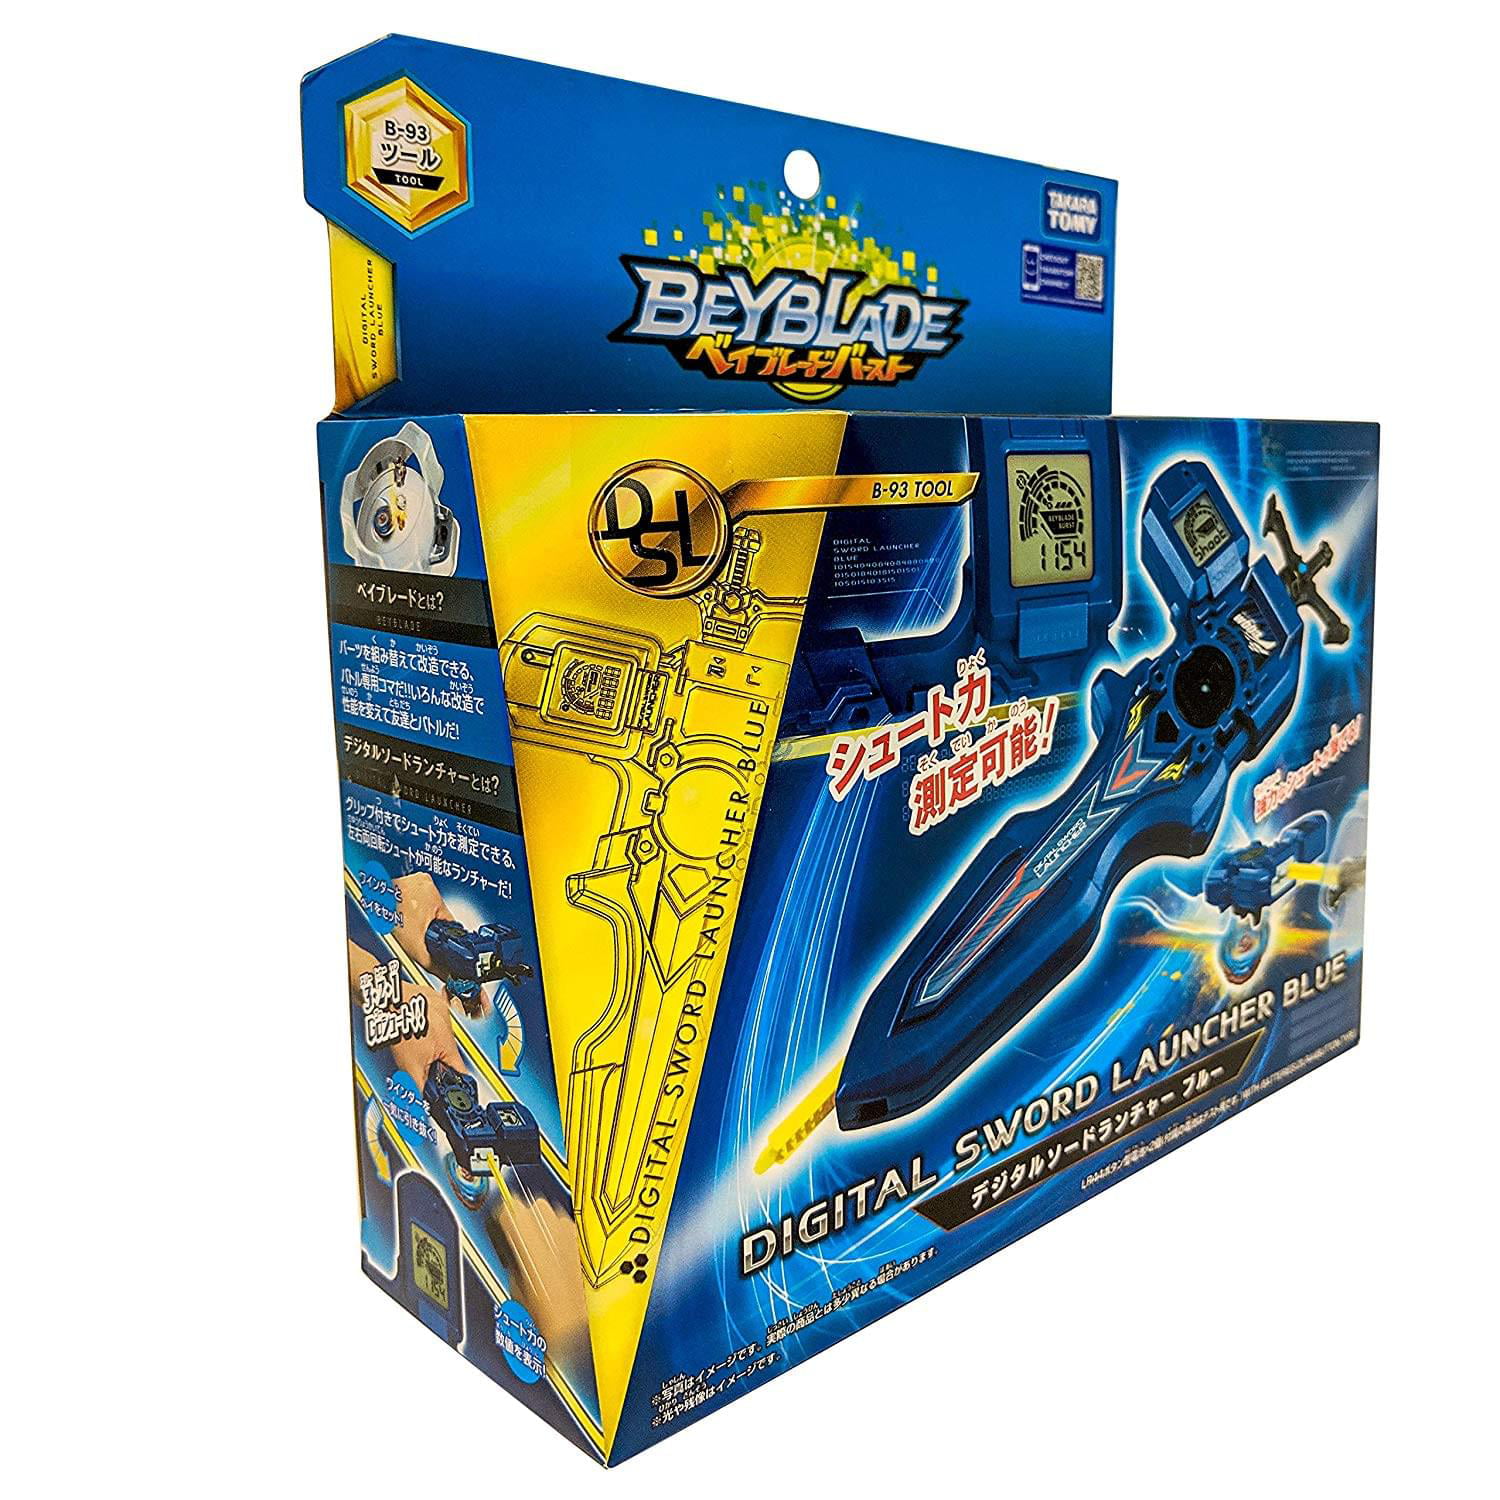 Beyblade Burst B-93 Digital Sword Launcher BLUE with Sword Winder Takara Tomy